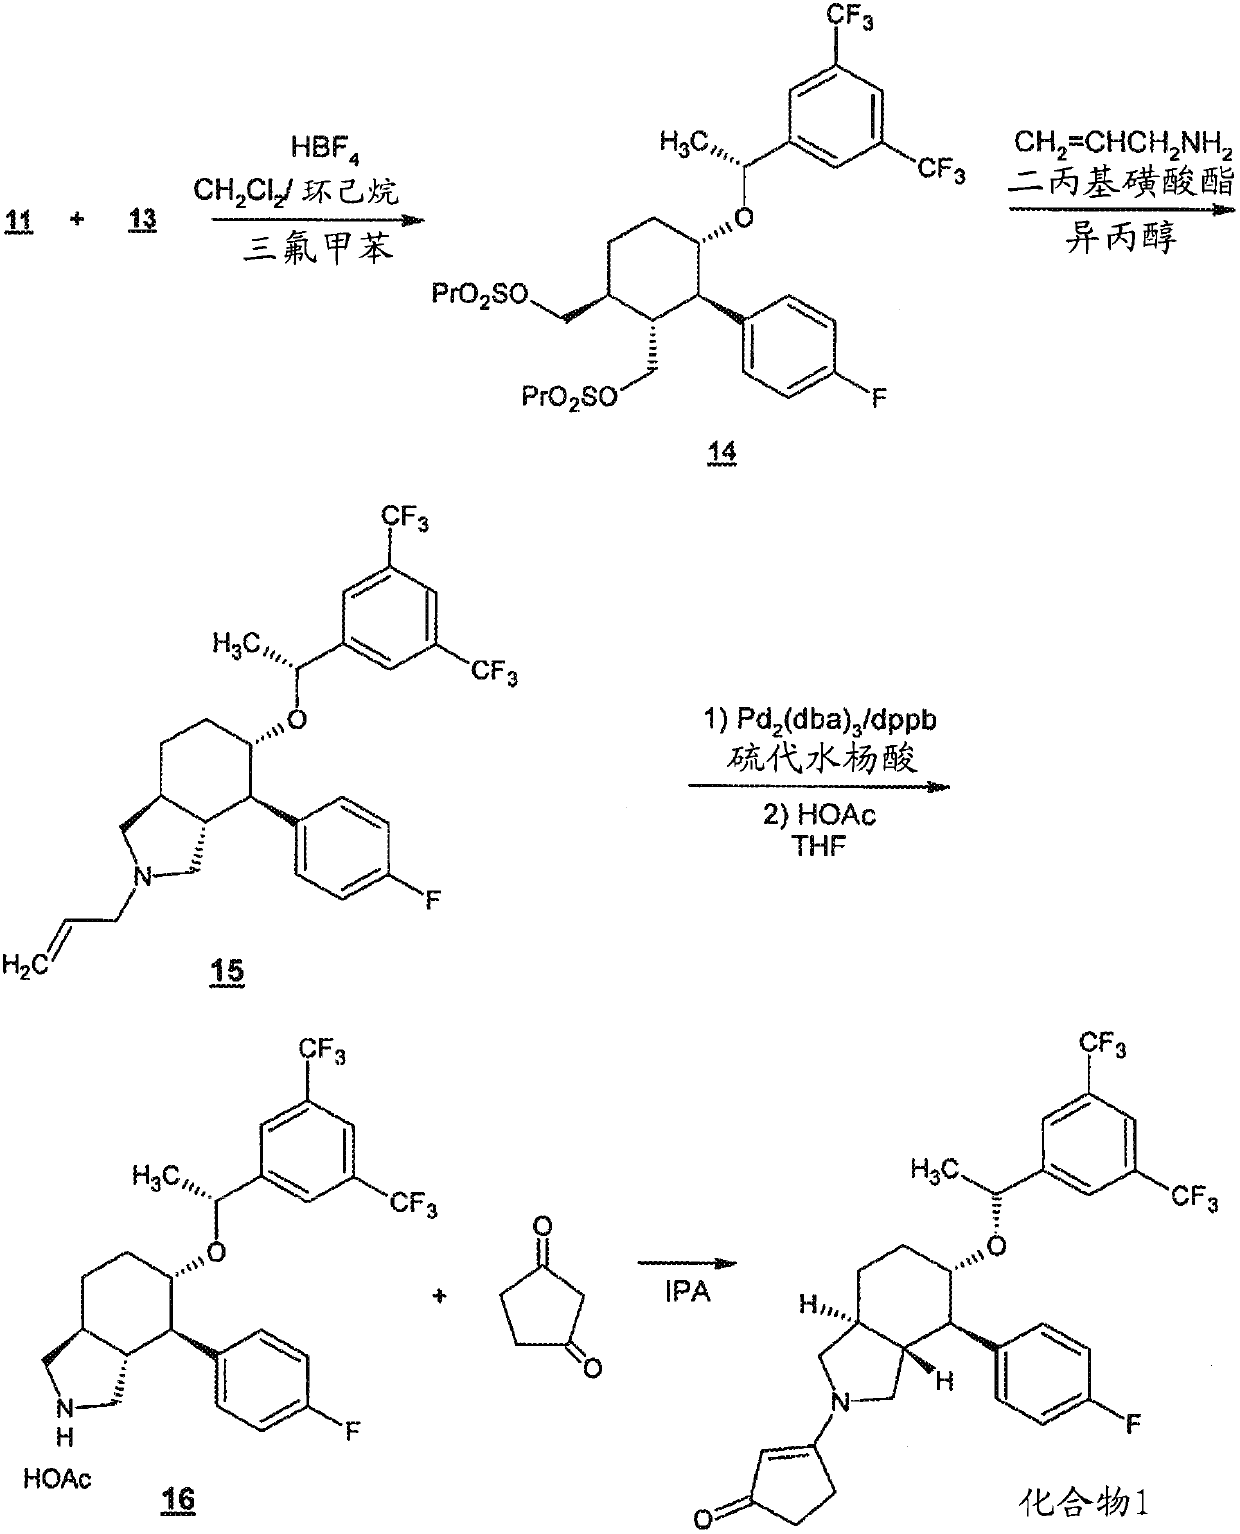 Use of NK-1 receptor antagonist serlopitant in pruritus